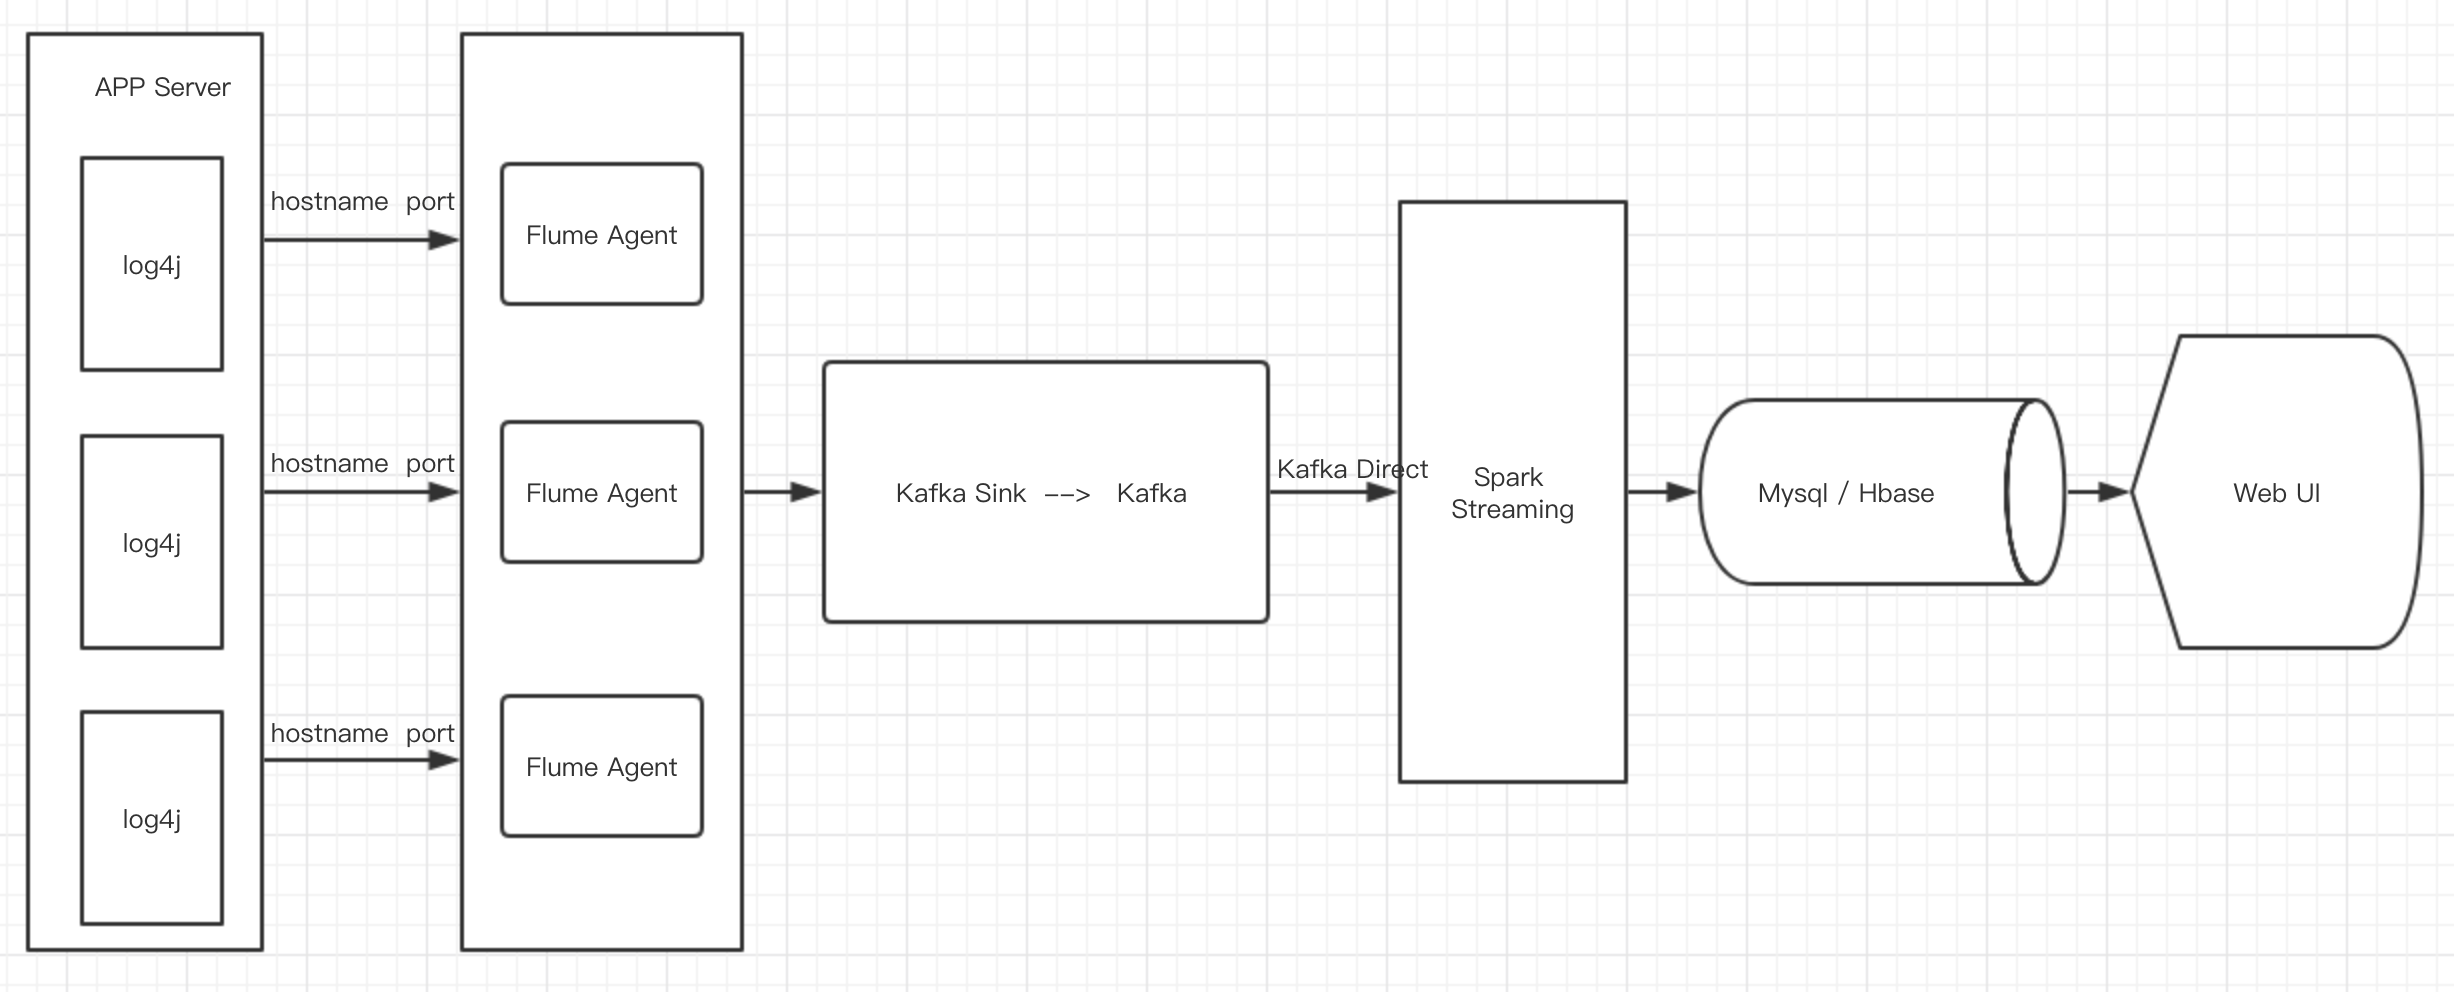 Kafka bootstrap servers. Kafka схема. Kafka БД архитектура. Схема Kafka Sink Connector. Распределенные вычисления Kafka.